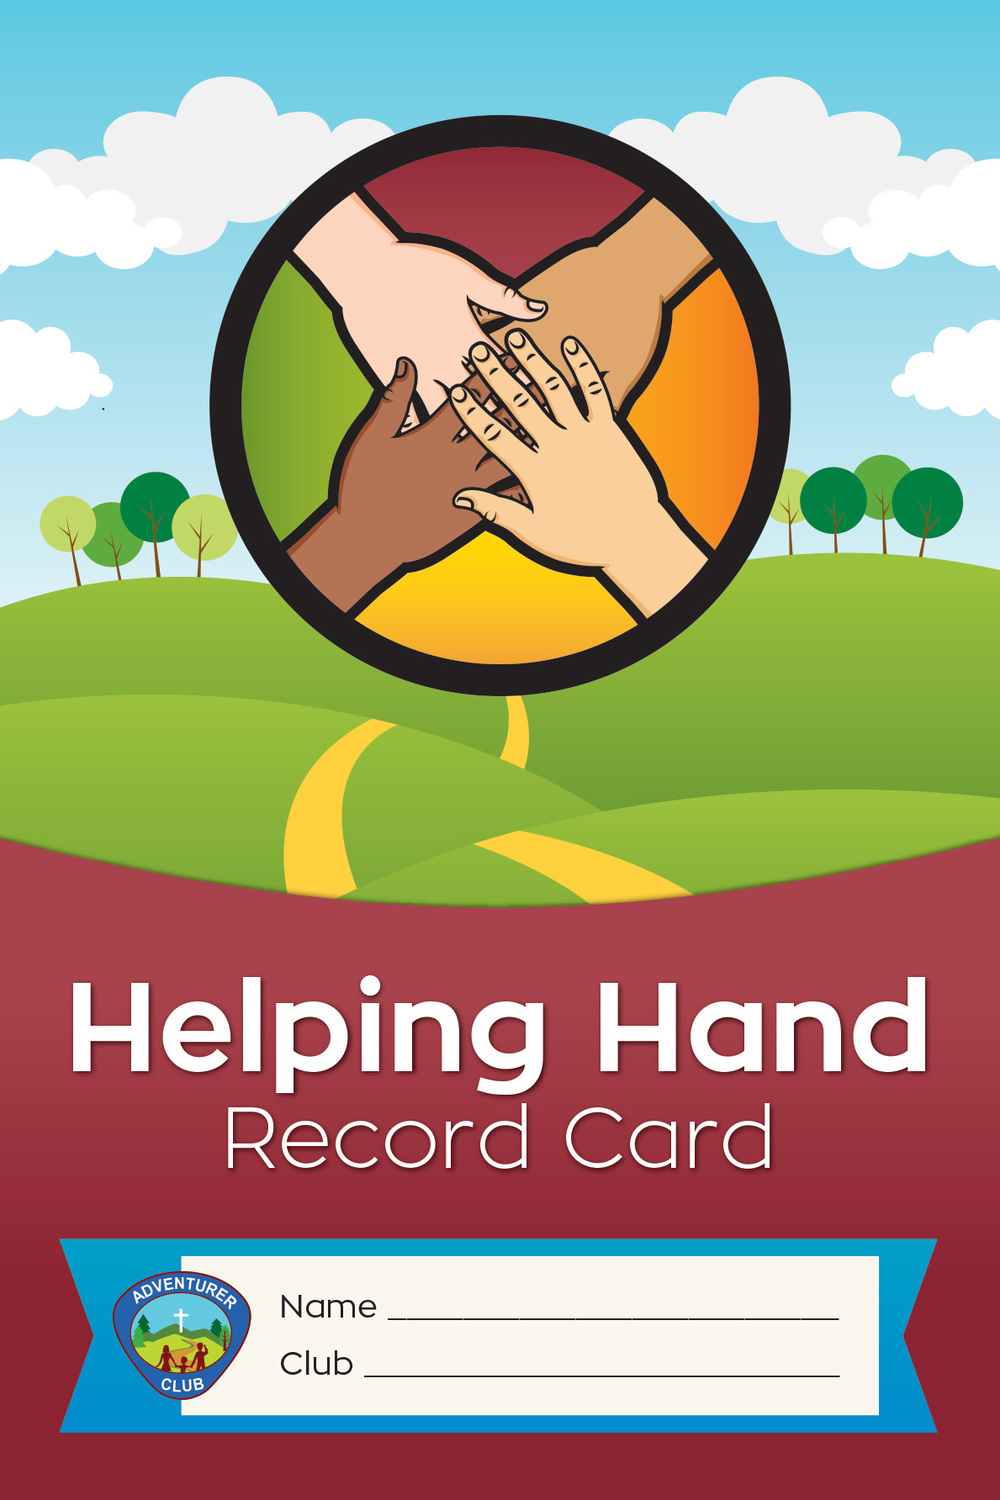 Adventurer Record Card, Helping Hand